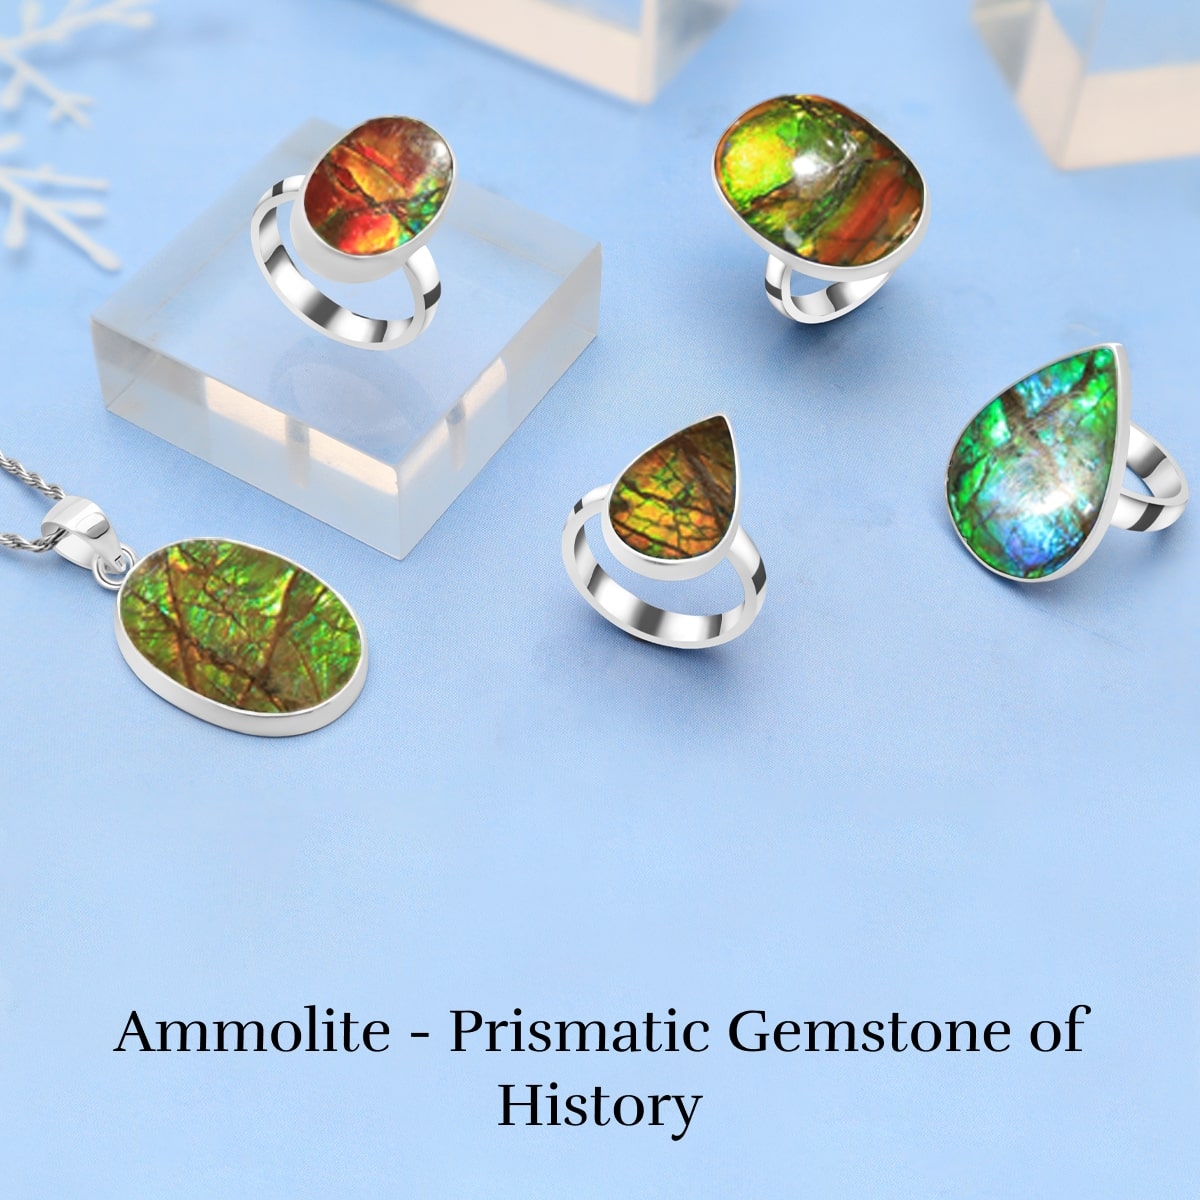 What is Ammolite